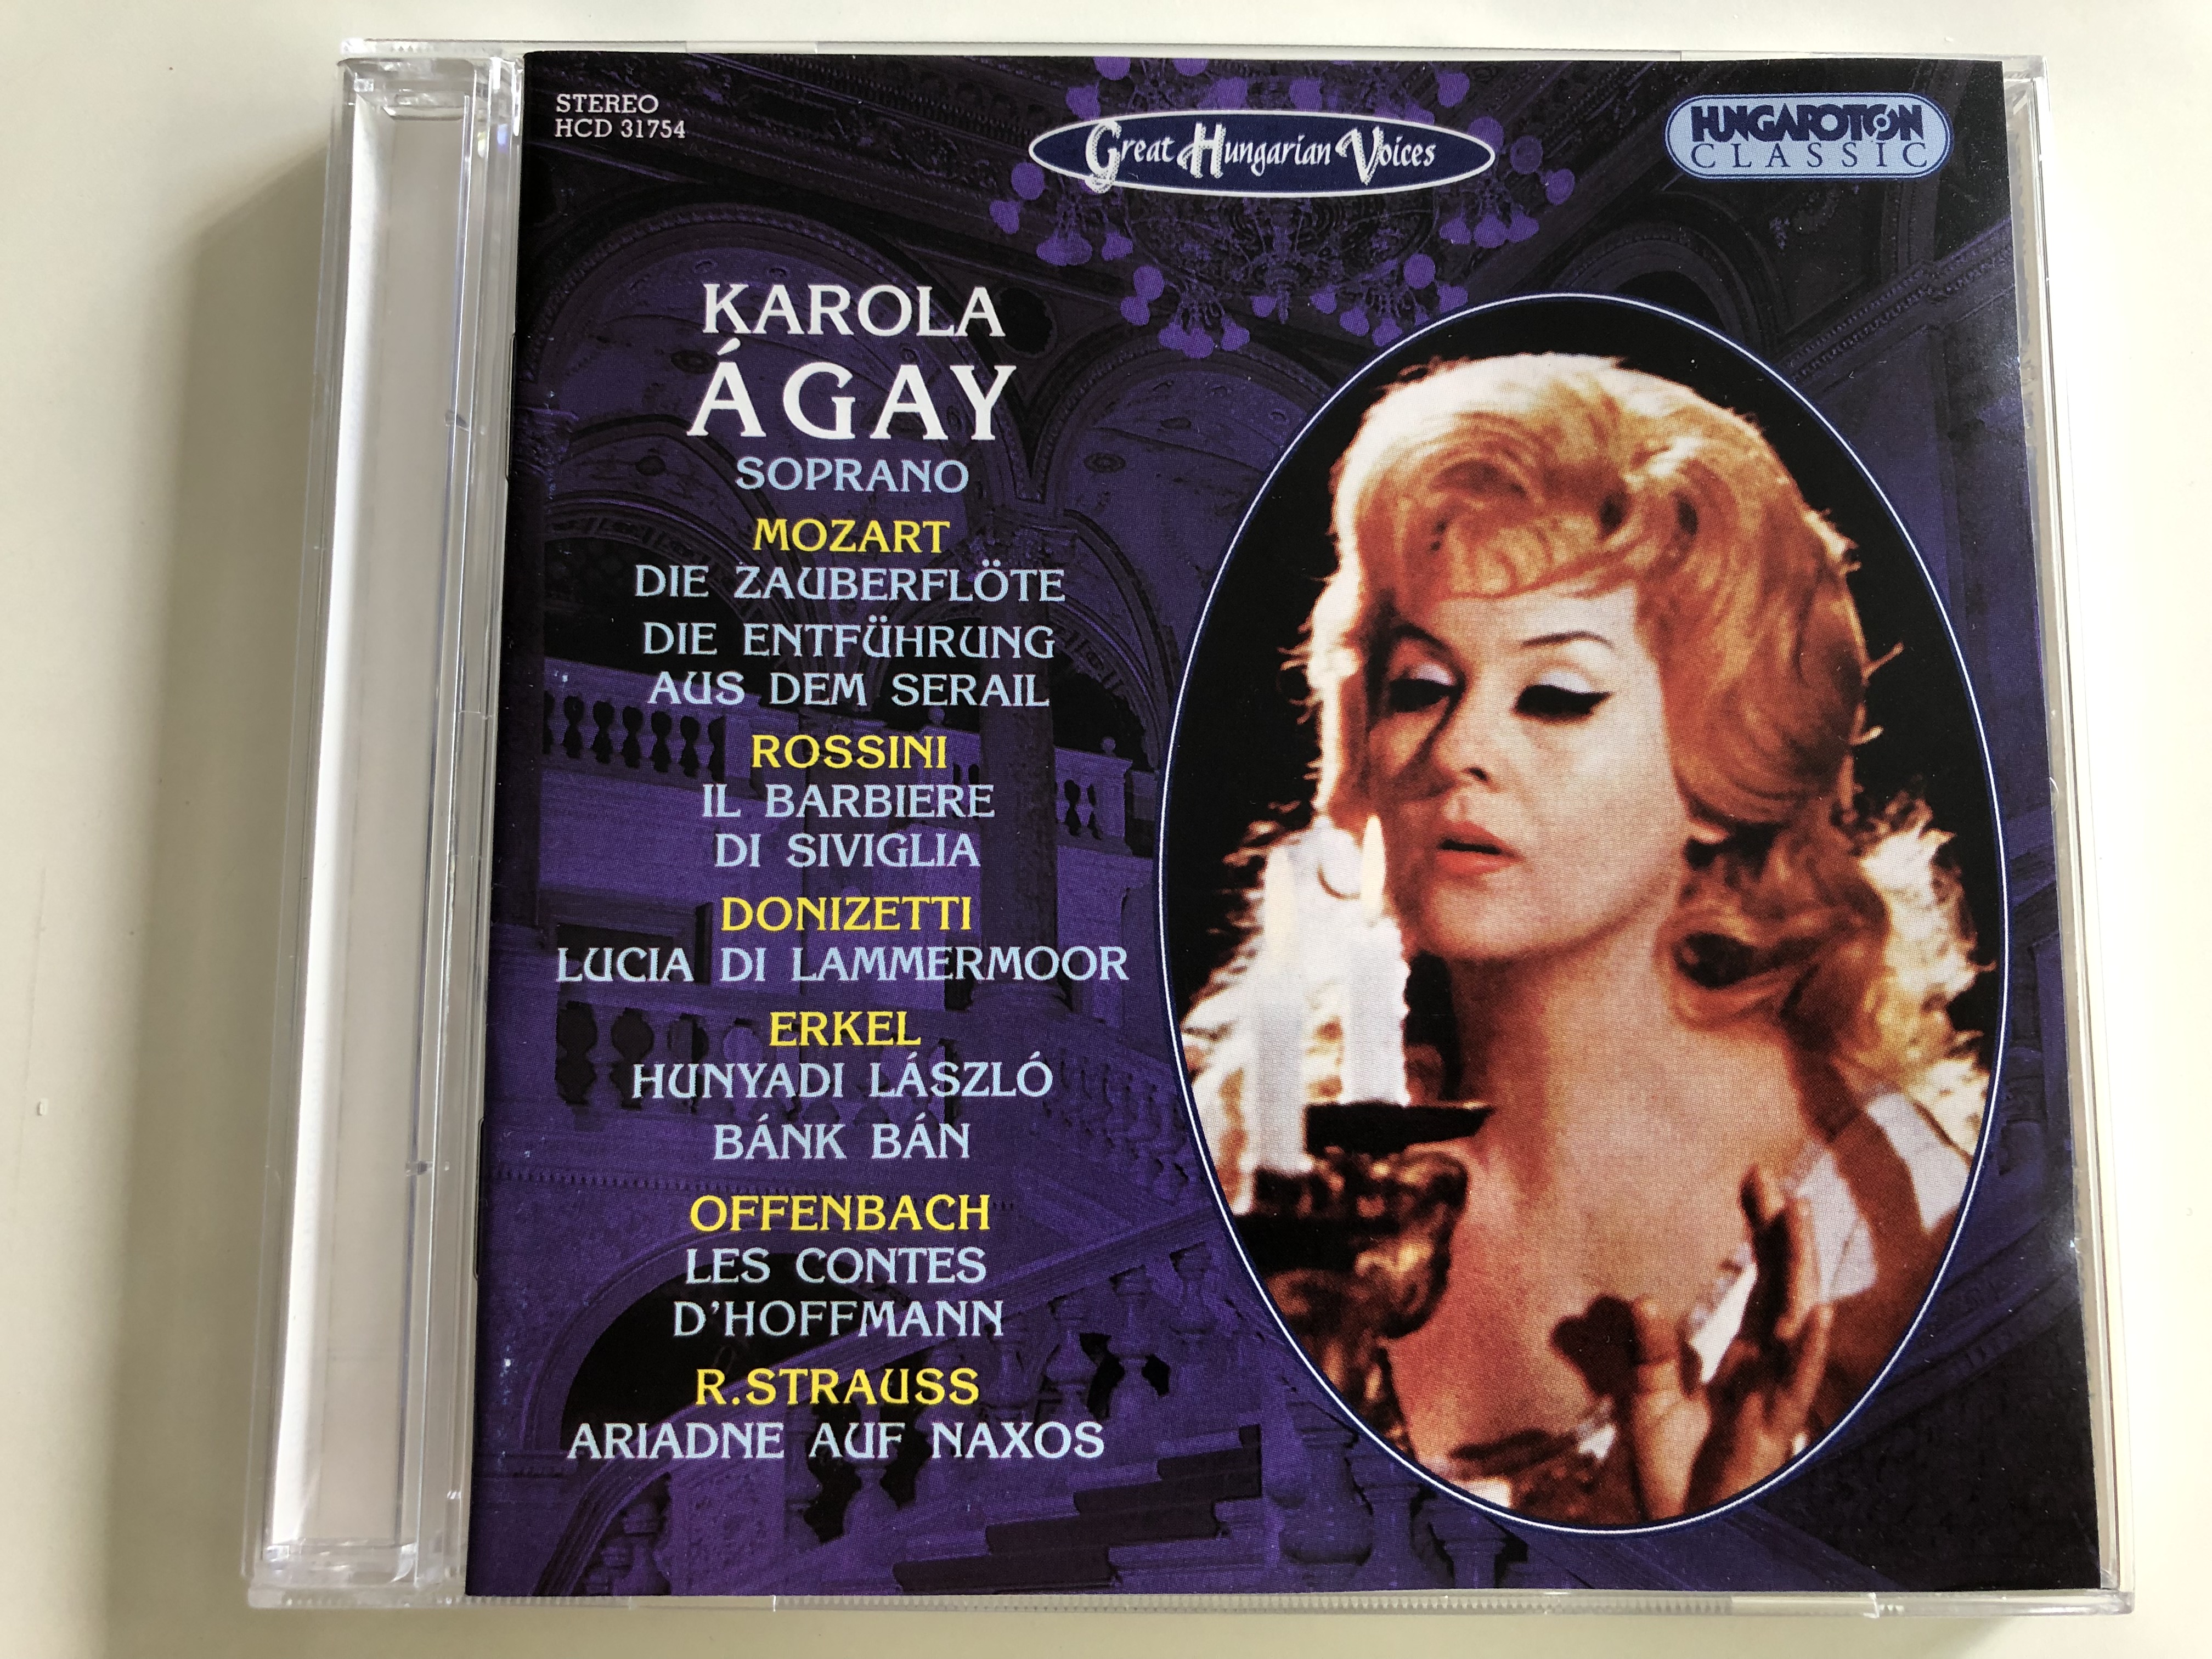 karola-agay-soprano-mozart-rossini-donizetti-offenbach-r.strauss-hungaroton-audio-cd-stereo-1970-hcd-31754-1-.jpg